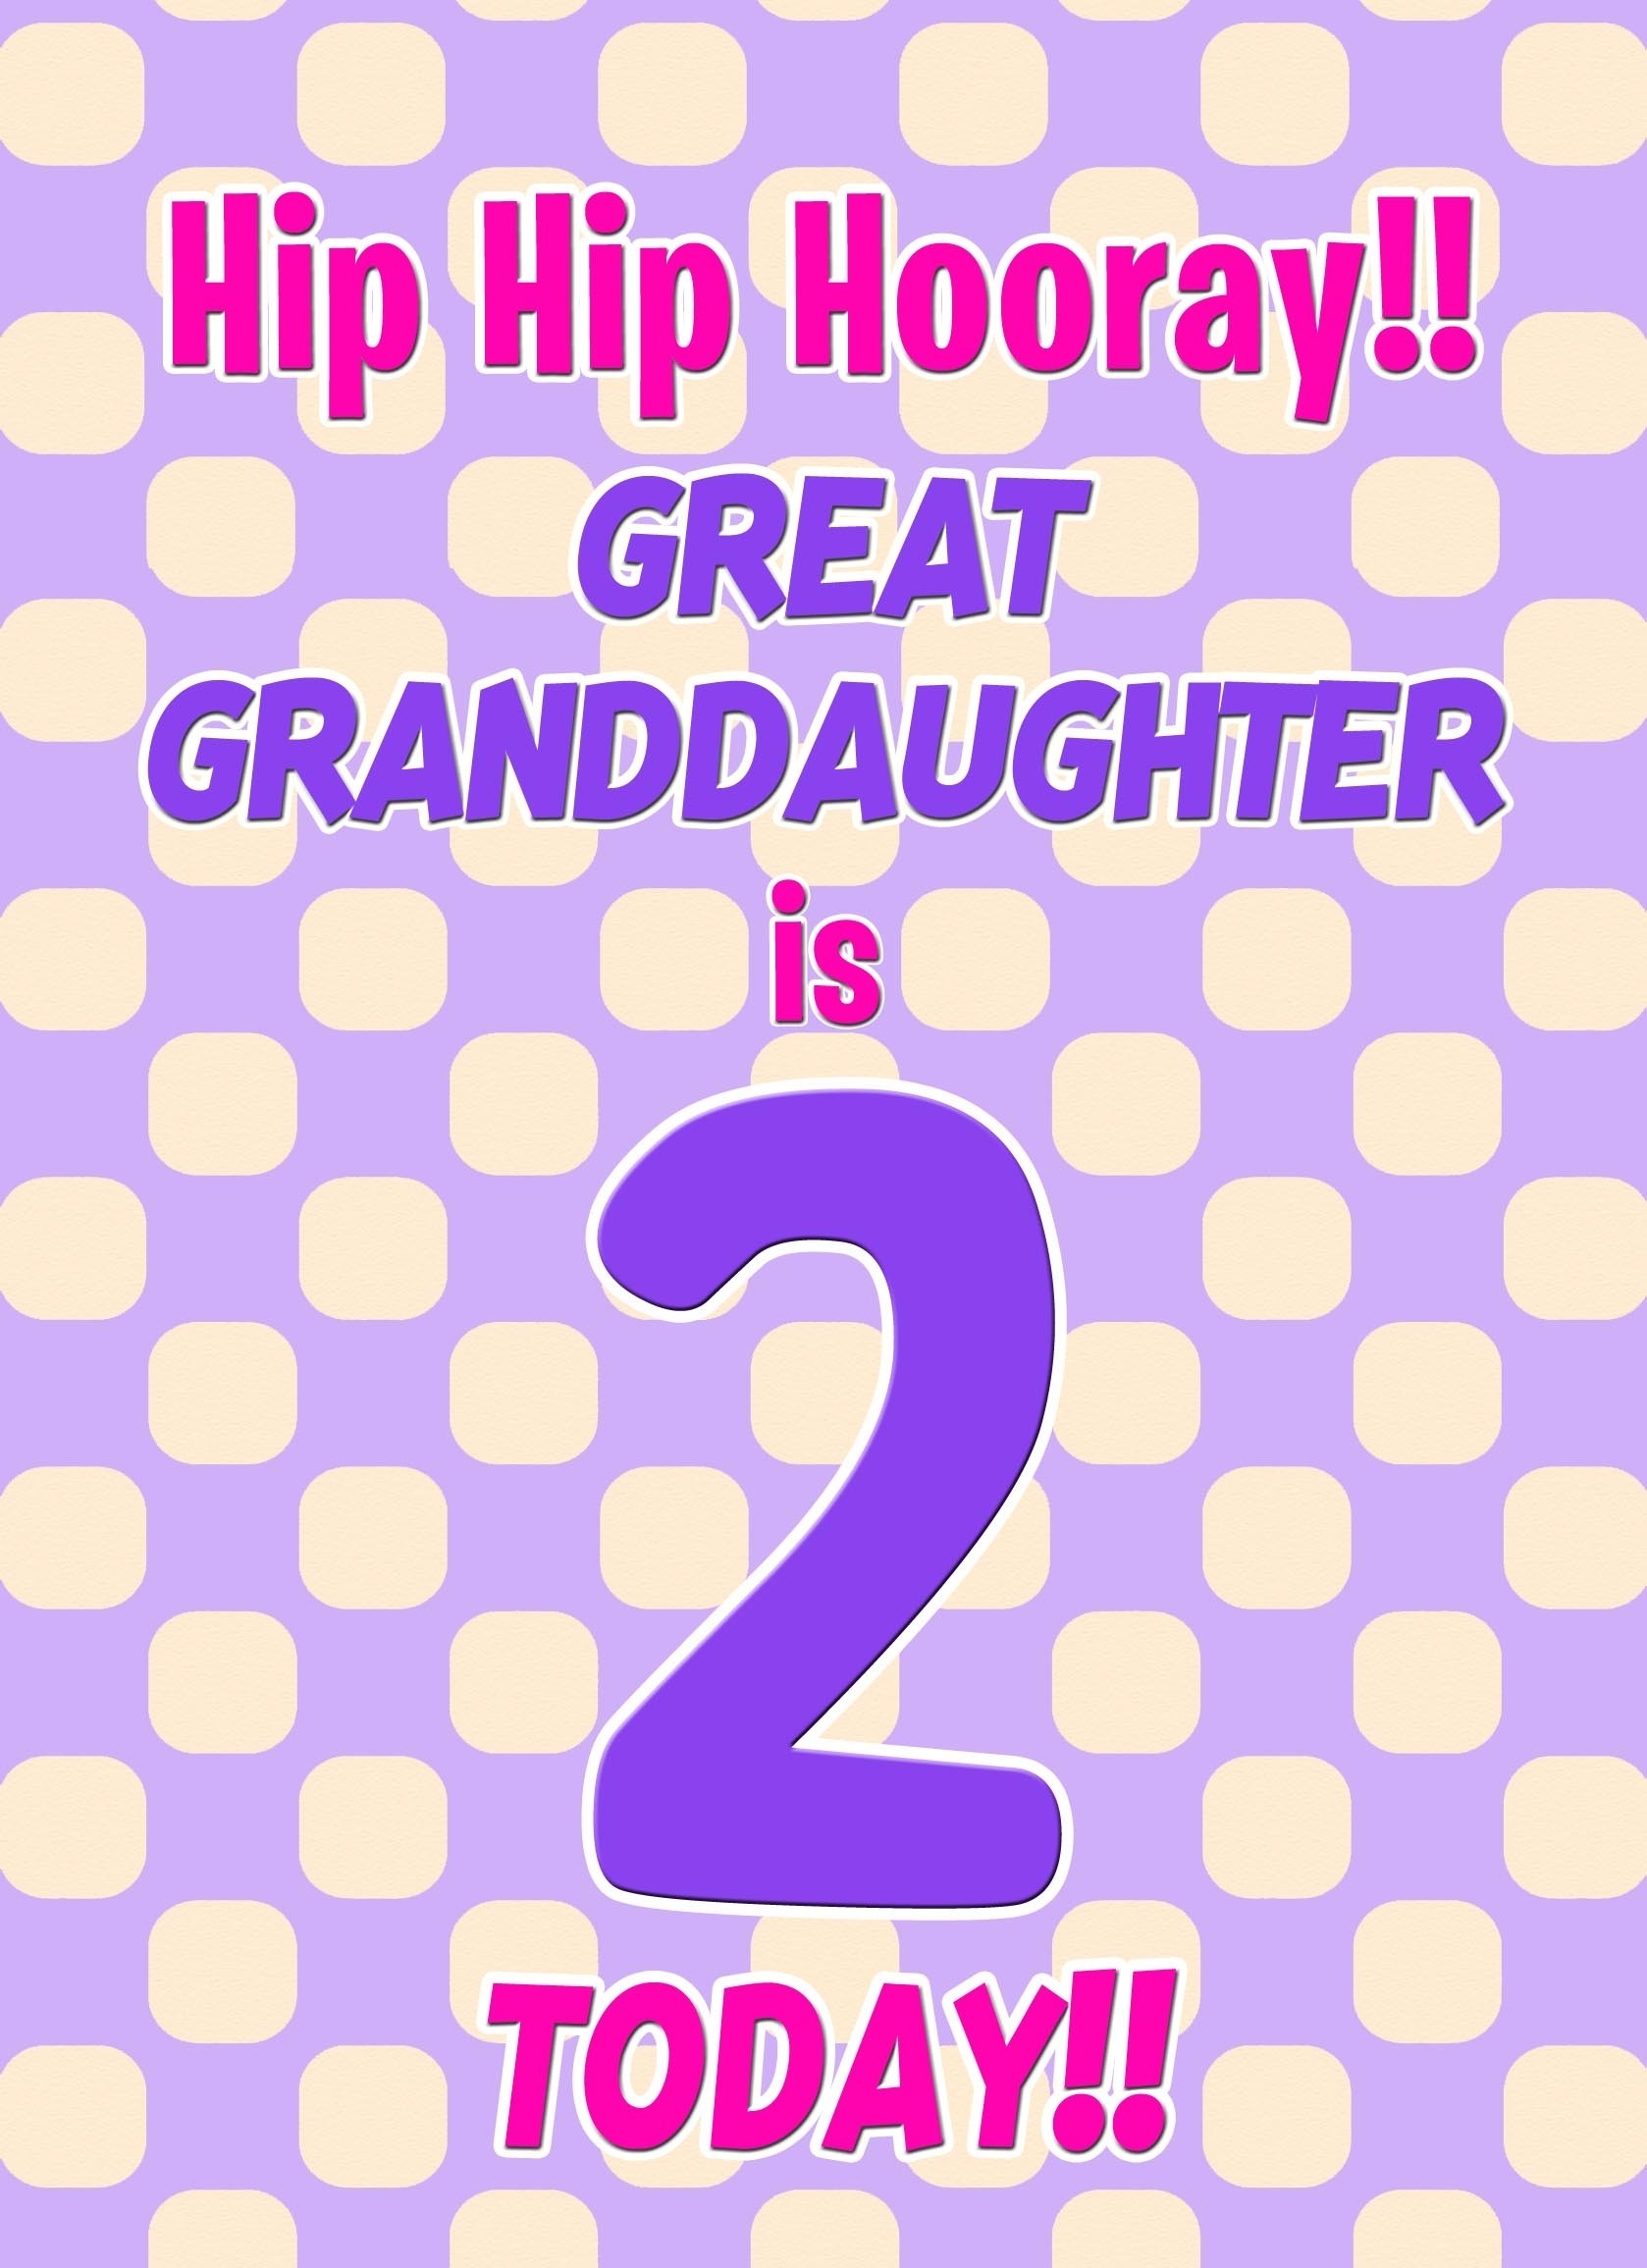 Great Granddaughter 2nd Birthday Card (Purple Spots)